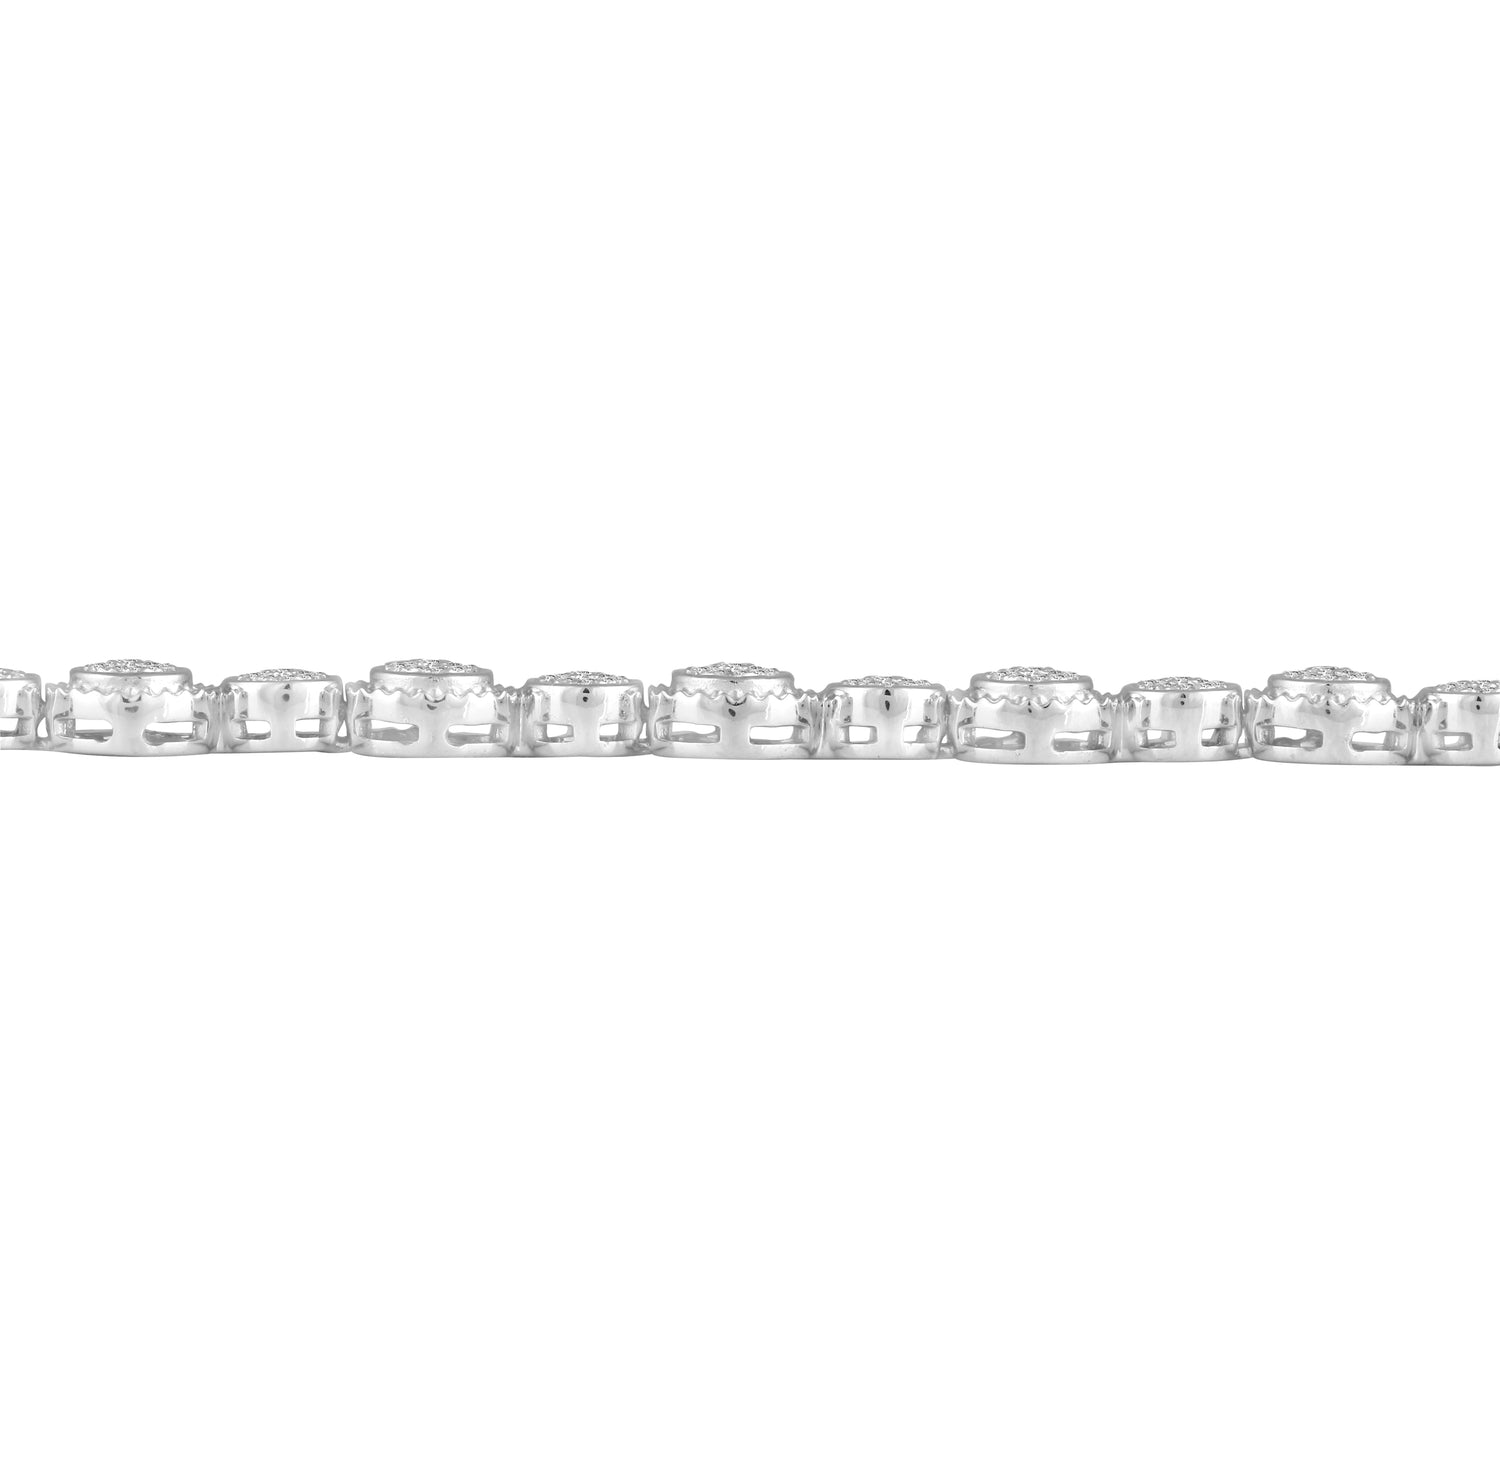 1 1/4 Carat tw Natural Diamond Round Cluster Tennis Bracelet in 925 Sterling Silver